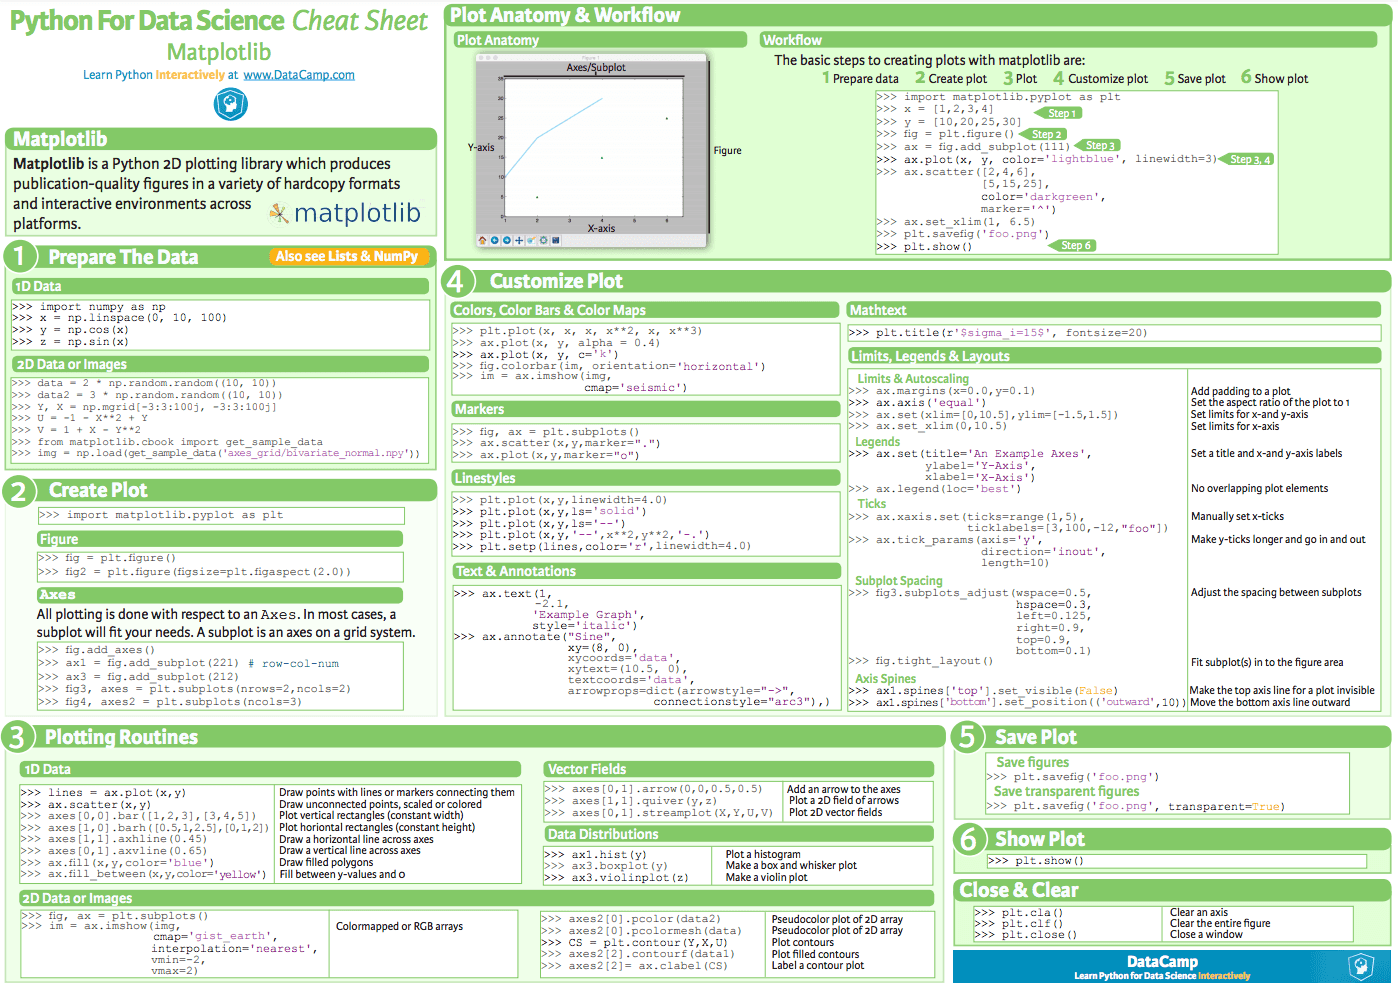 Matplotlib cheatsheet by Datacamp